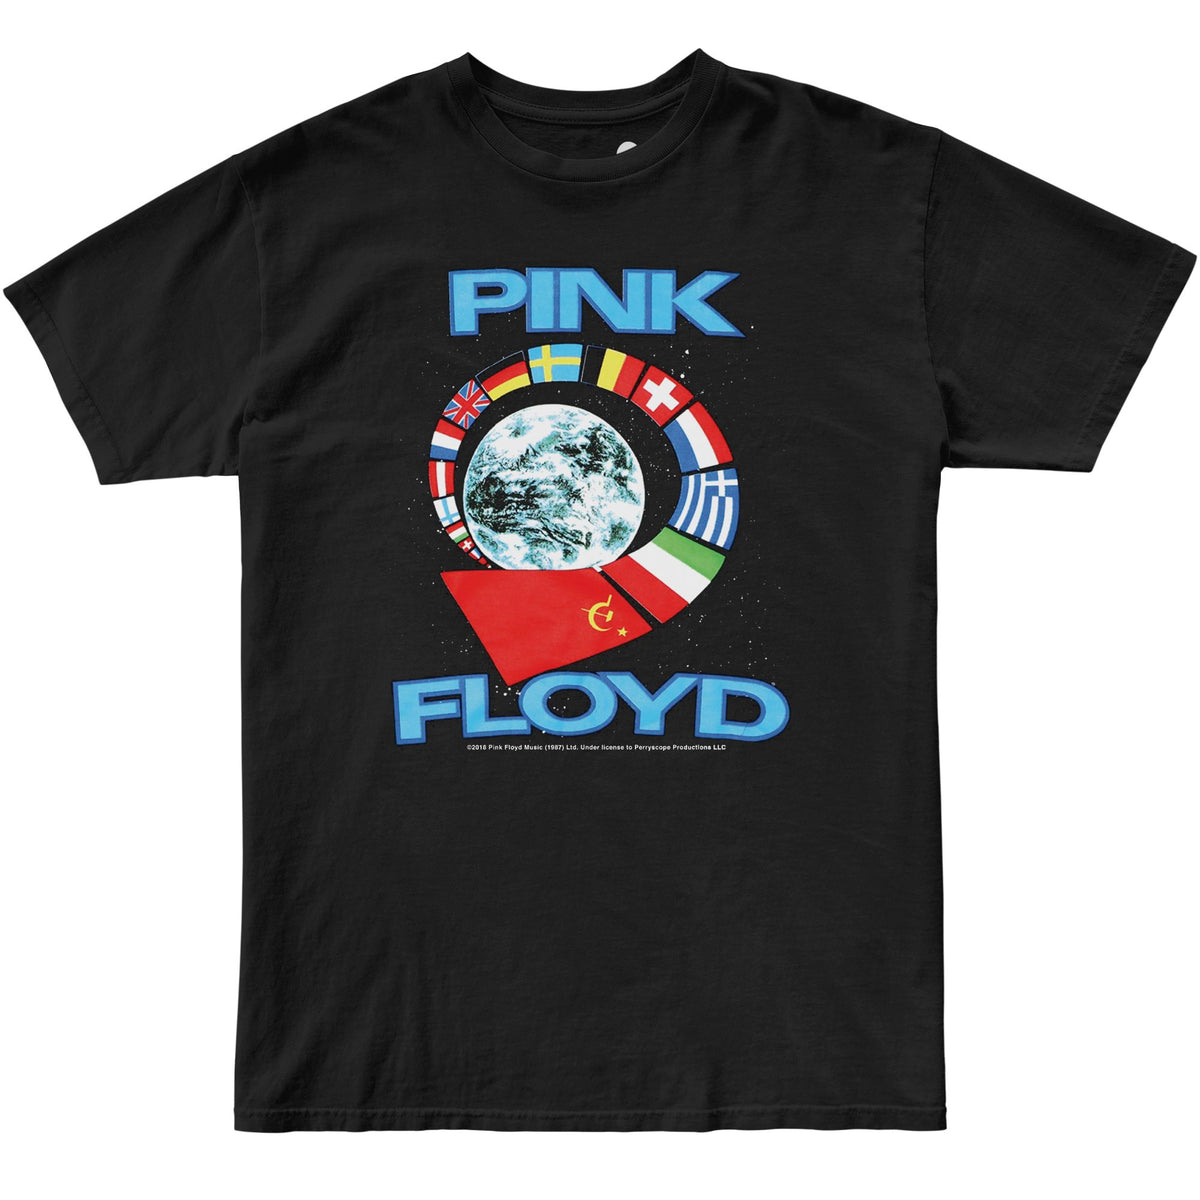 Pink Floyd 100% Cotton Tee